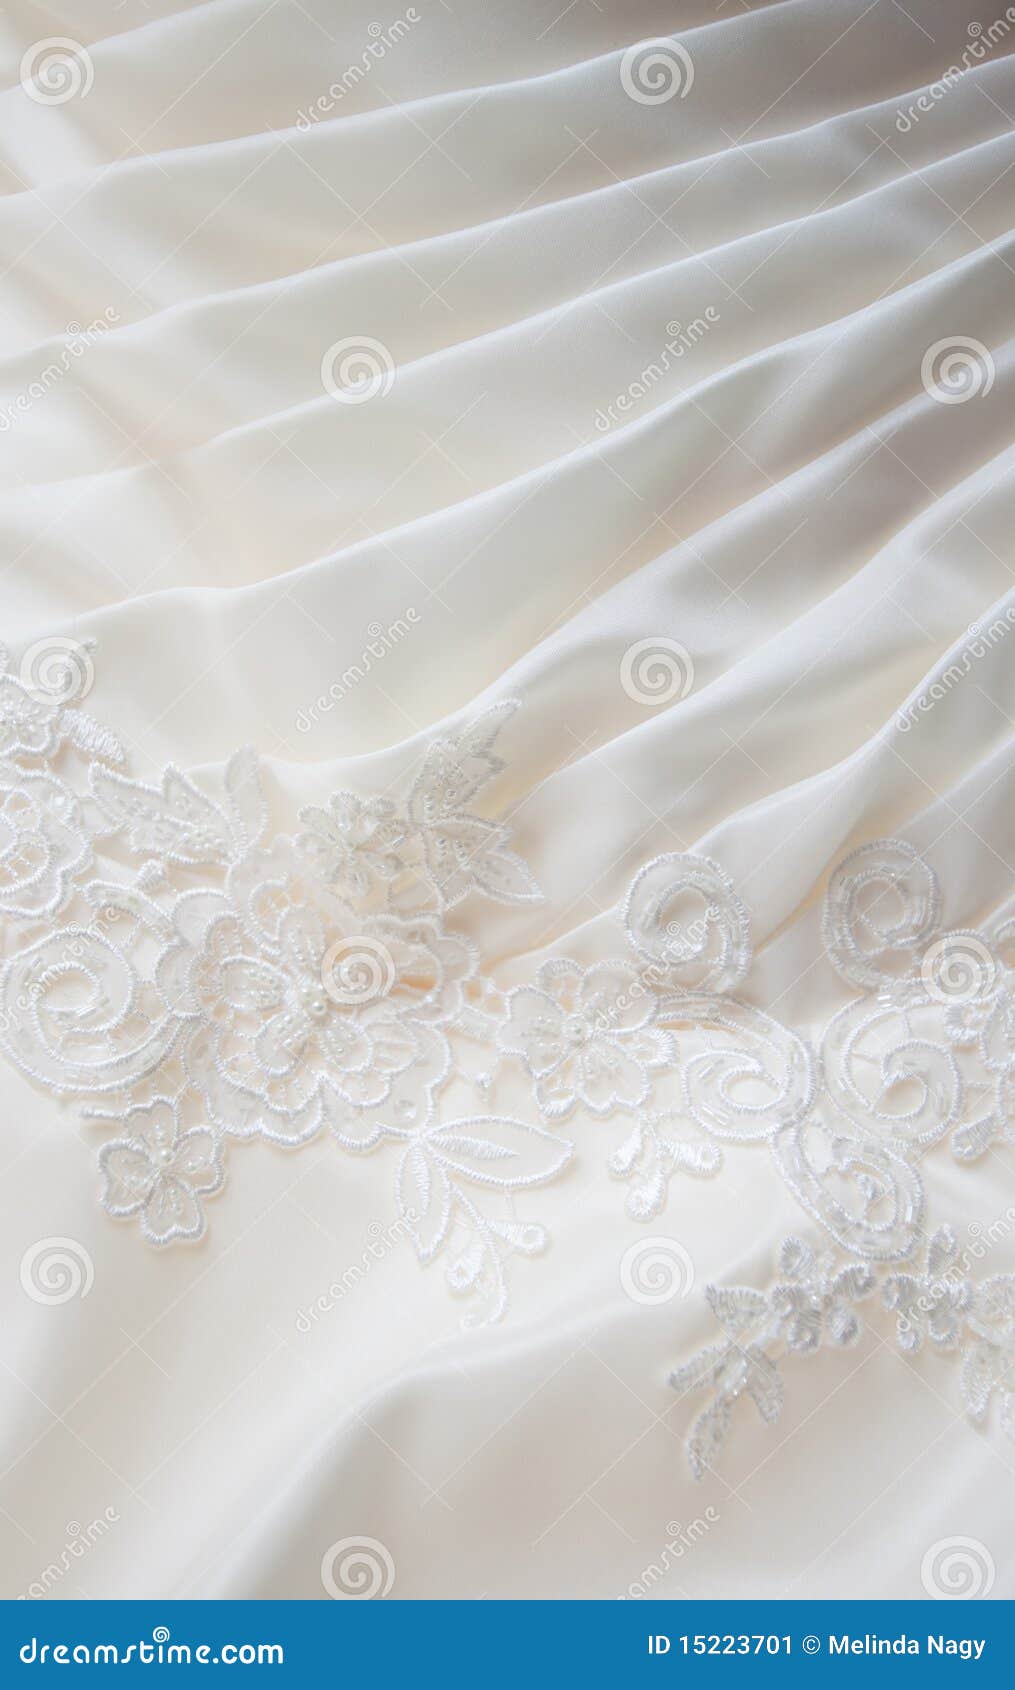 Wedding dress detail stock image. Image of luxury, pleated - 15223701